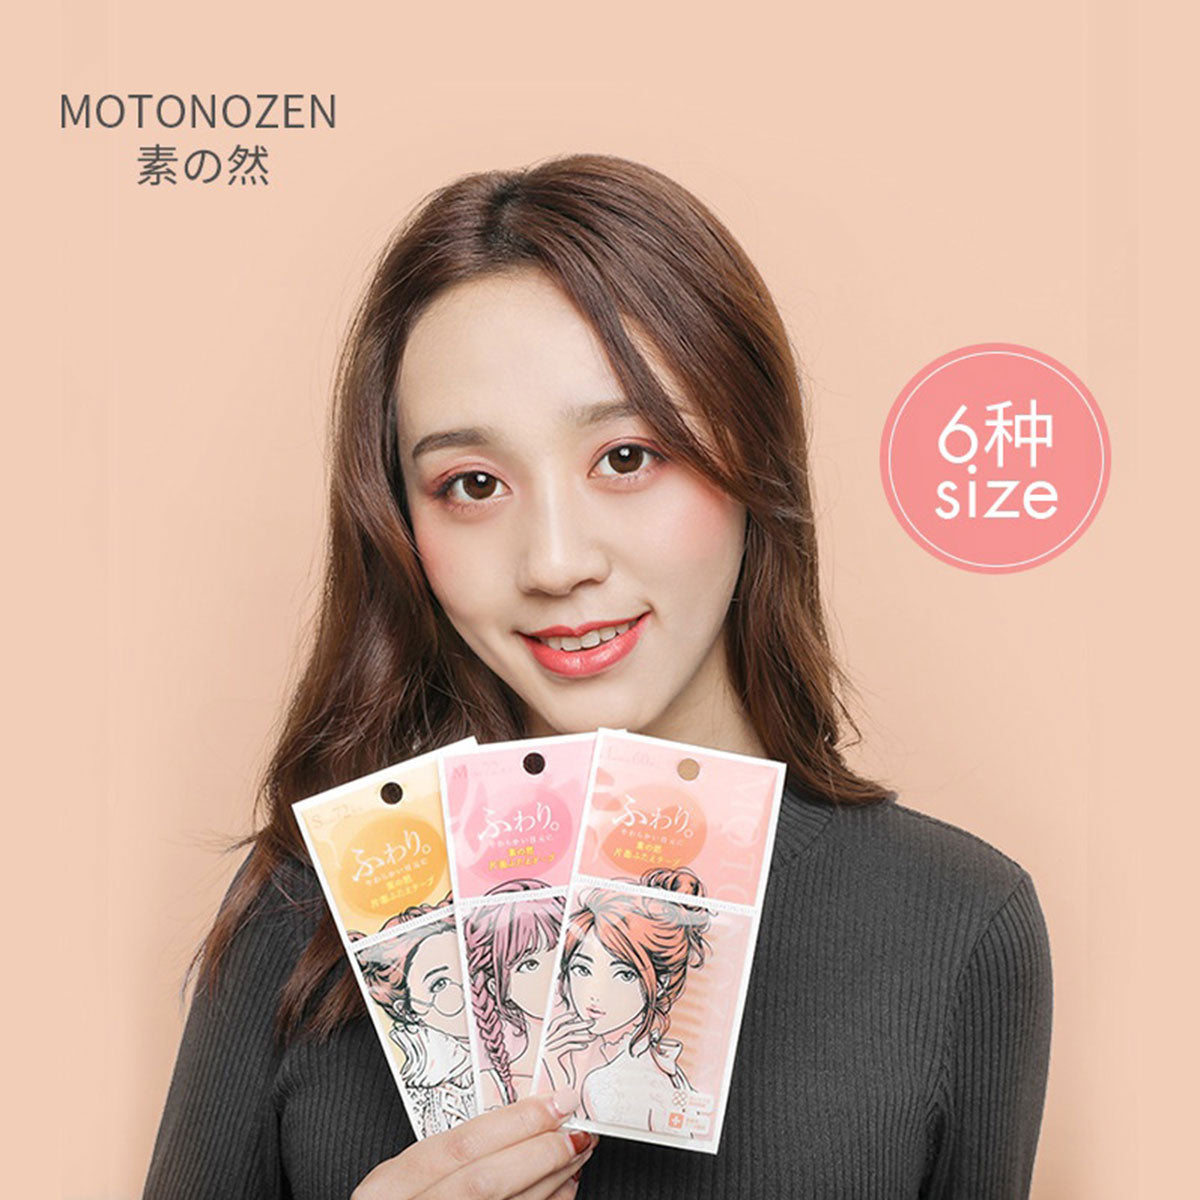 Motonozen Single-sided Eyelid Tape L 30 pairs